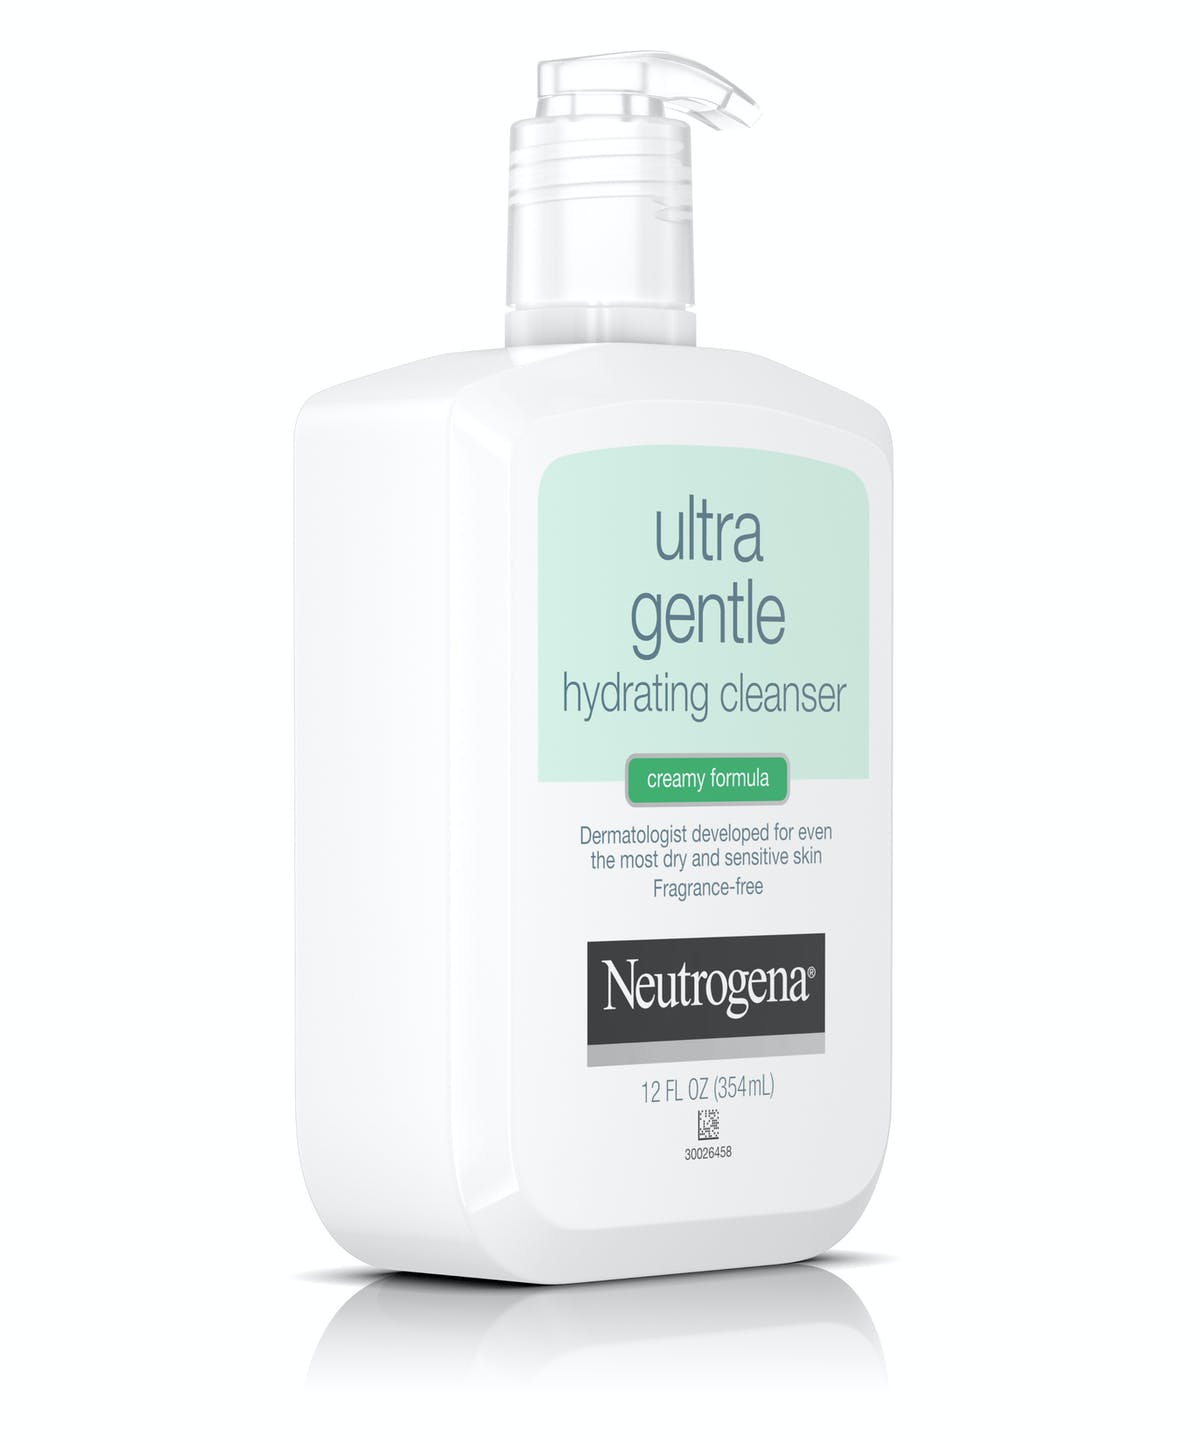 Neutrogena Cleanser